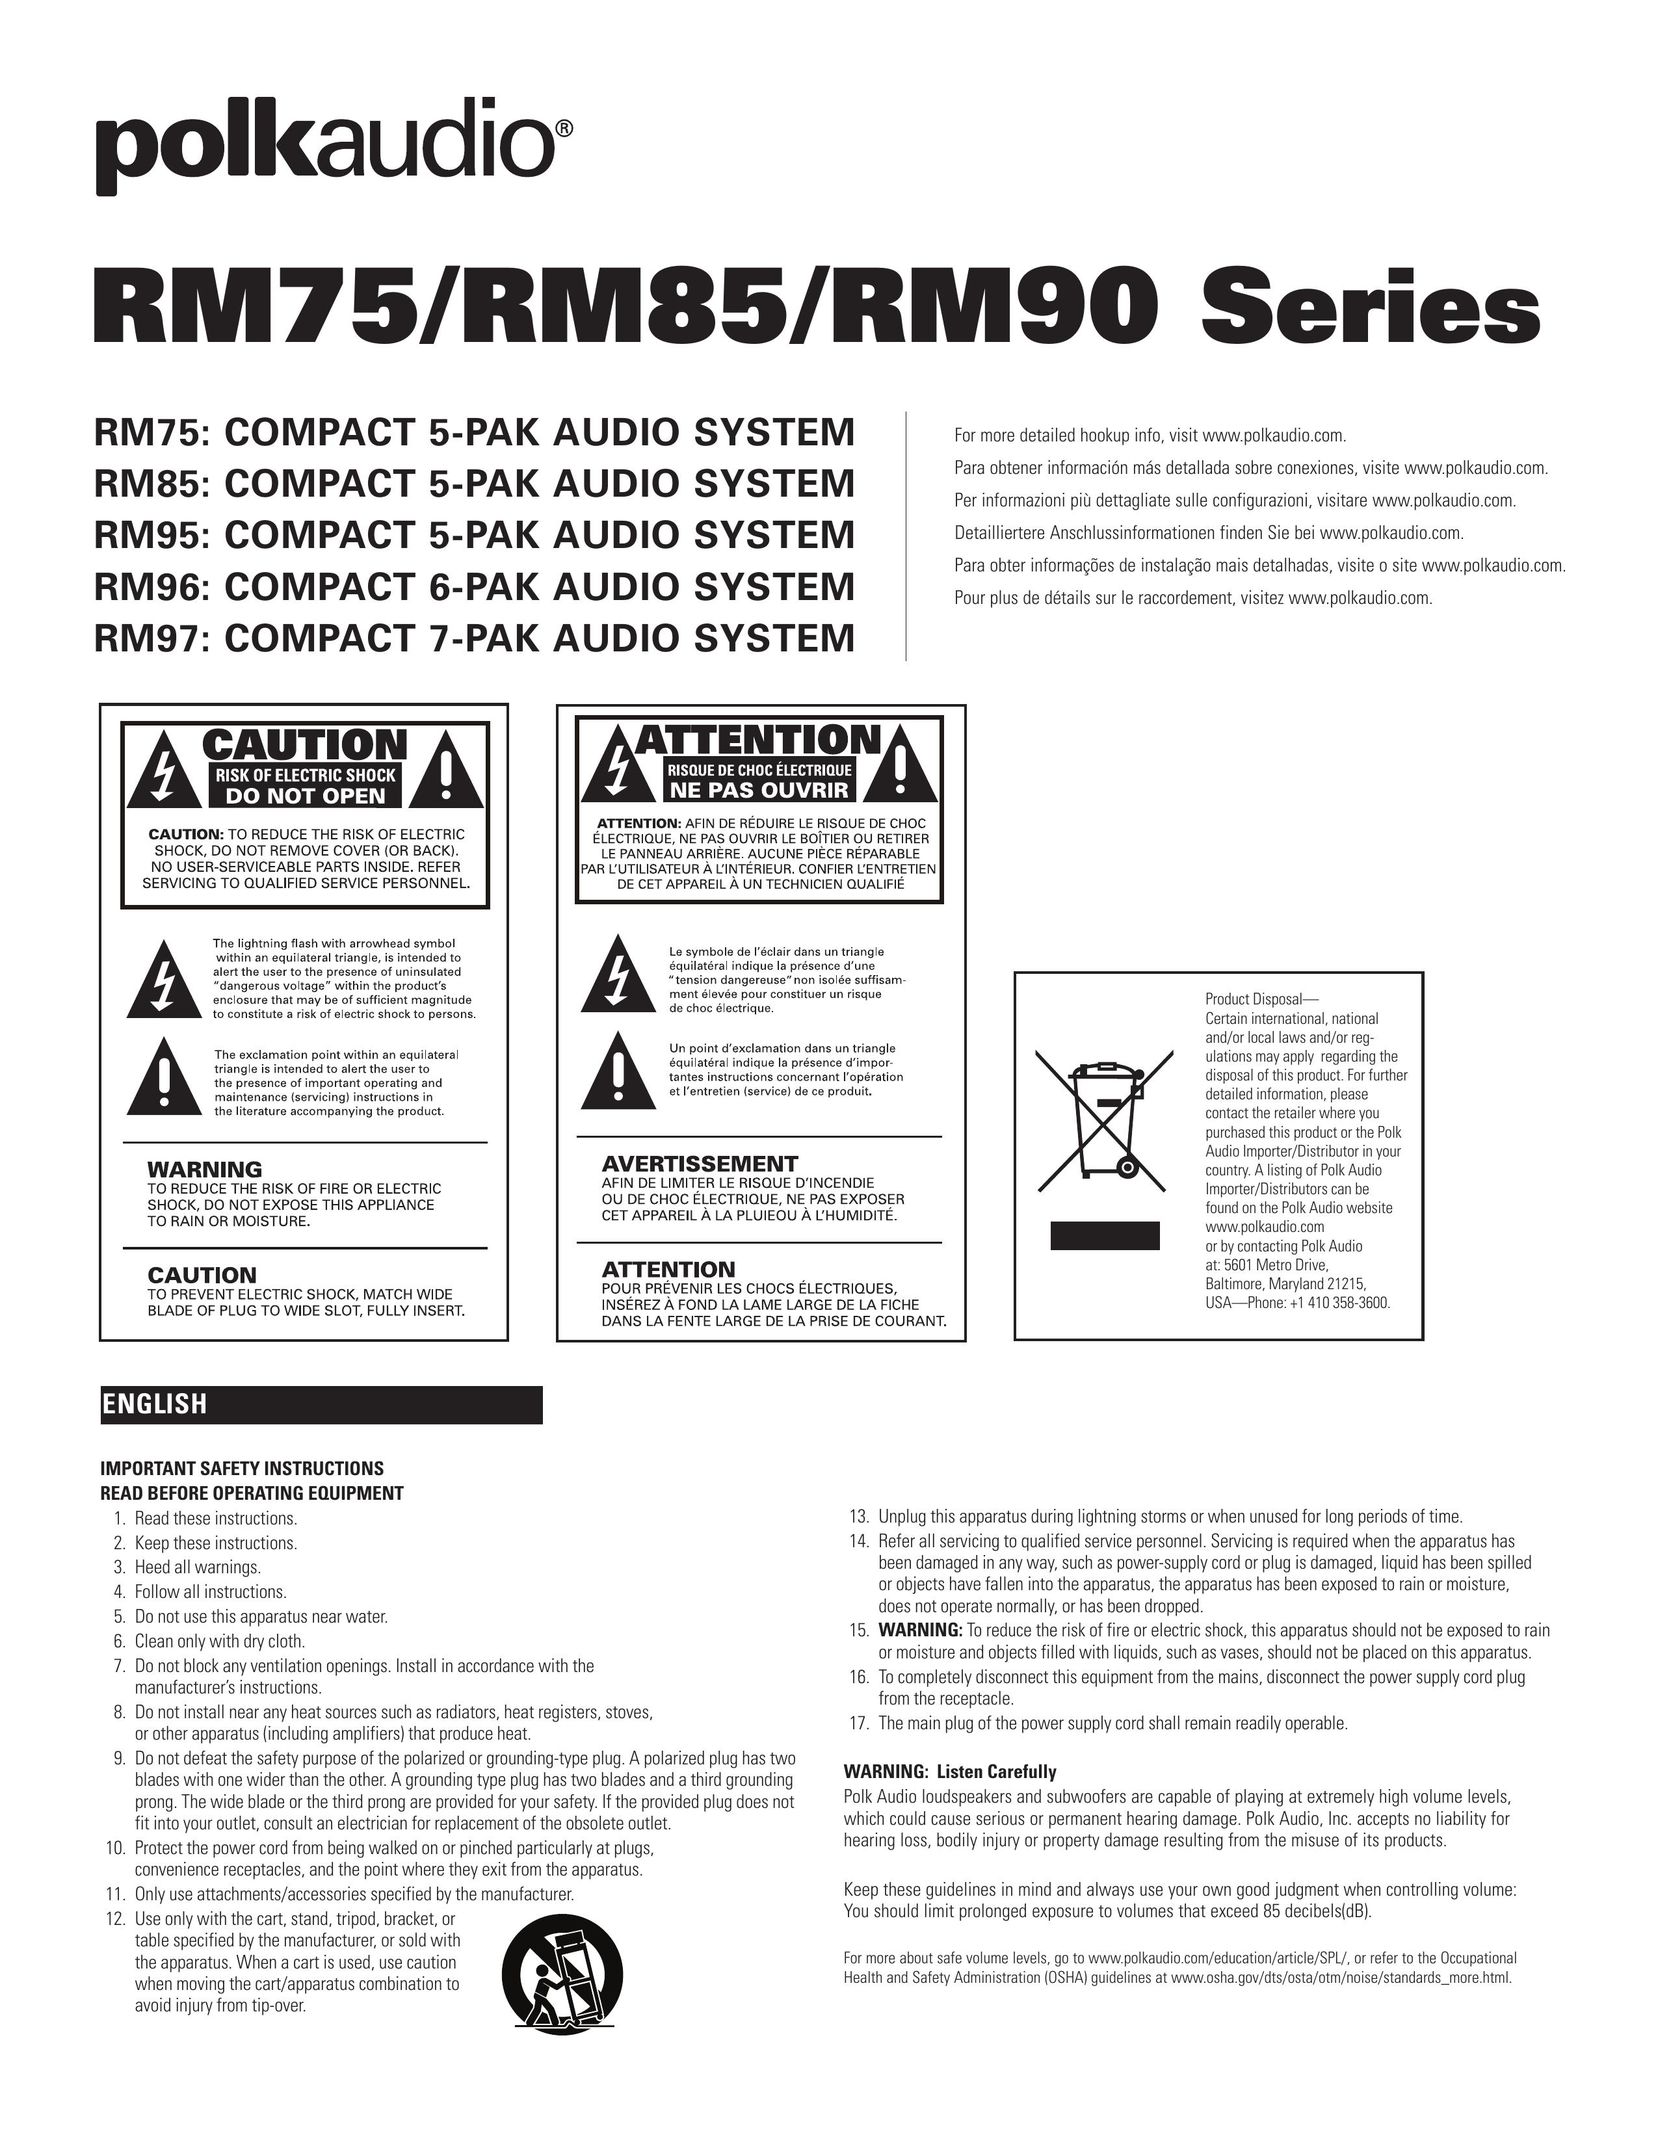 Polk Audio RM96 Stereo System User Manual